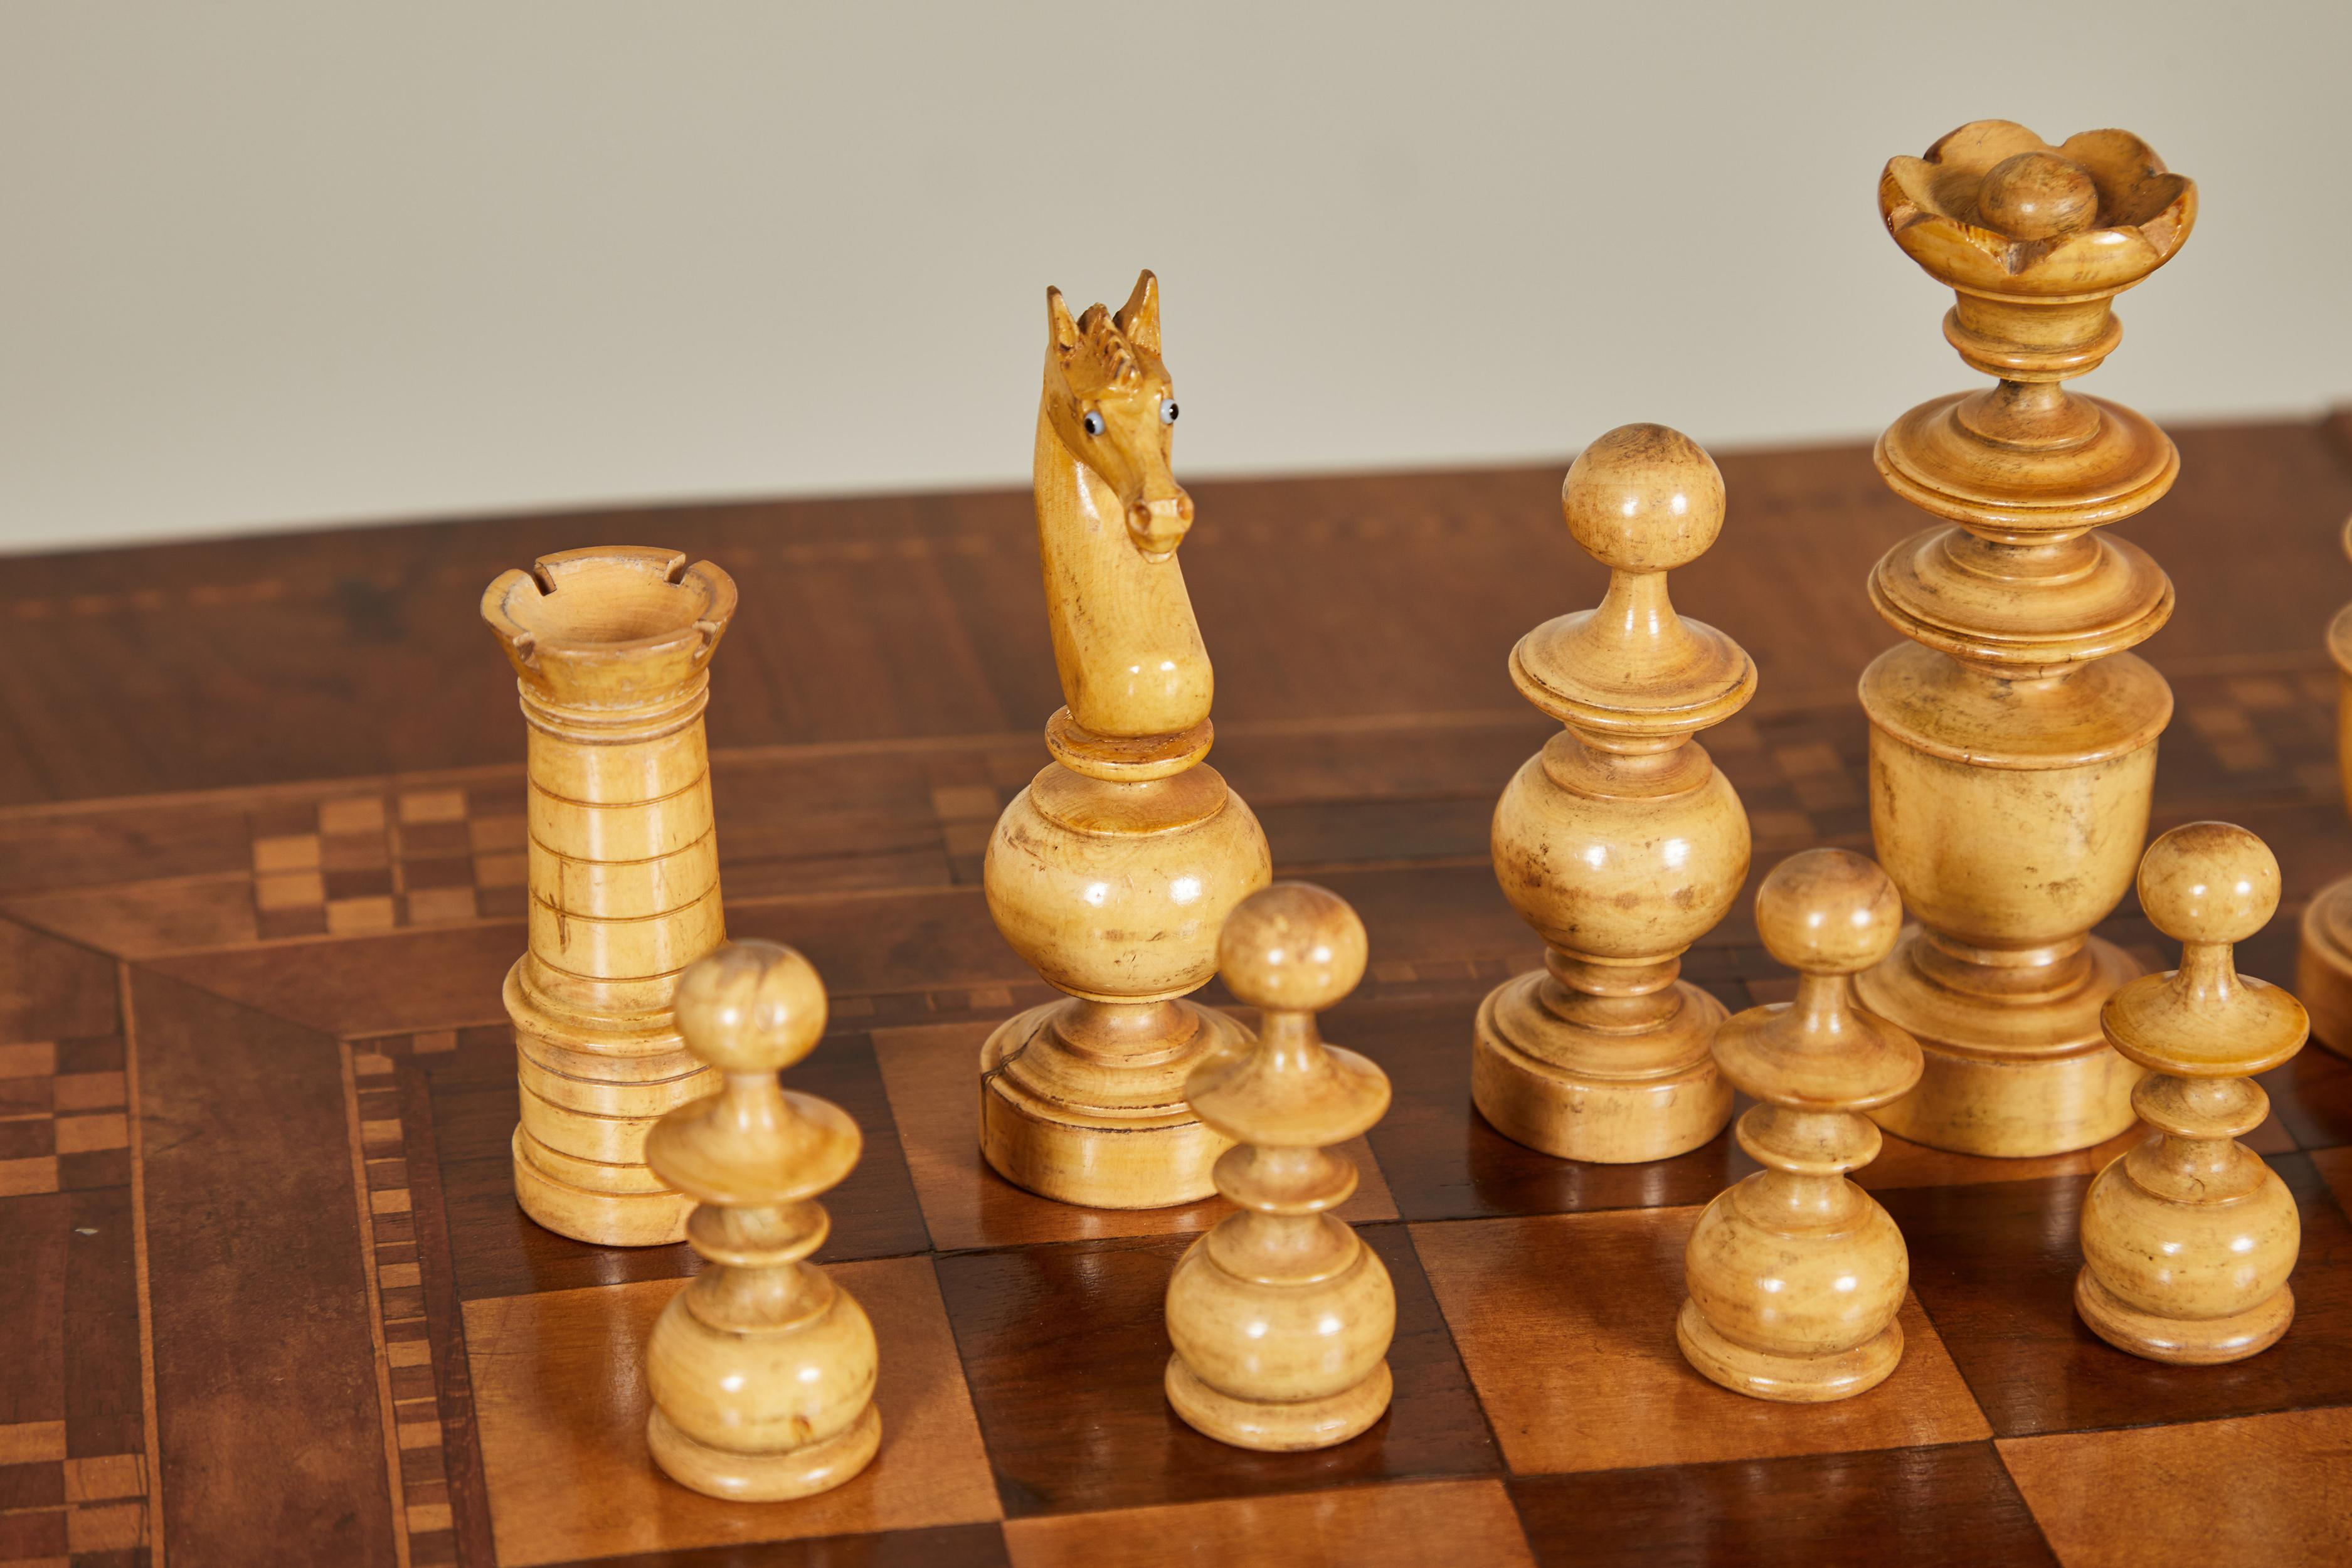 19th century chess set